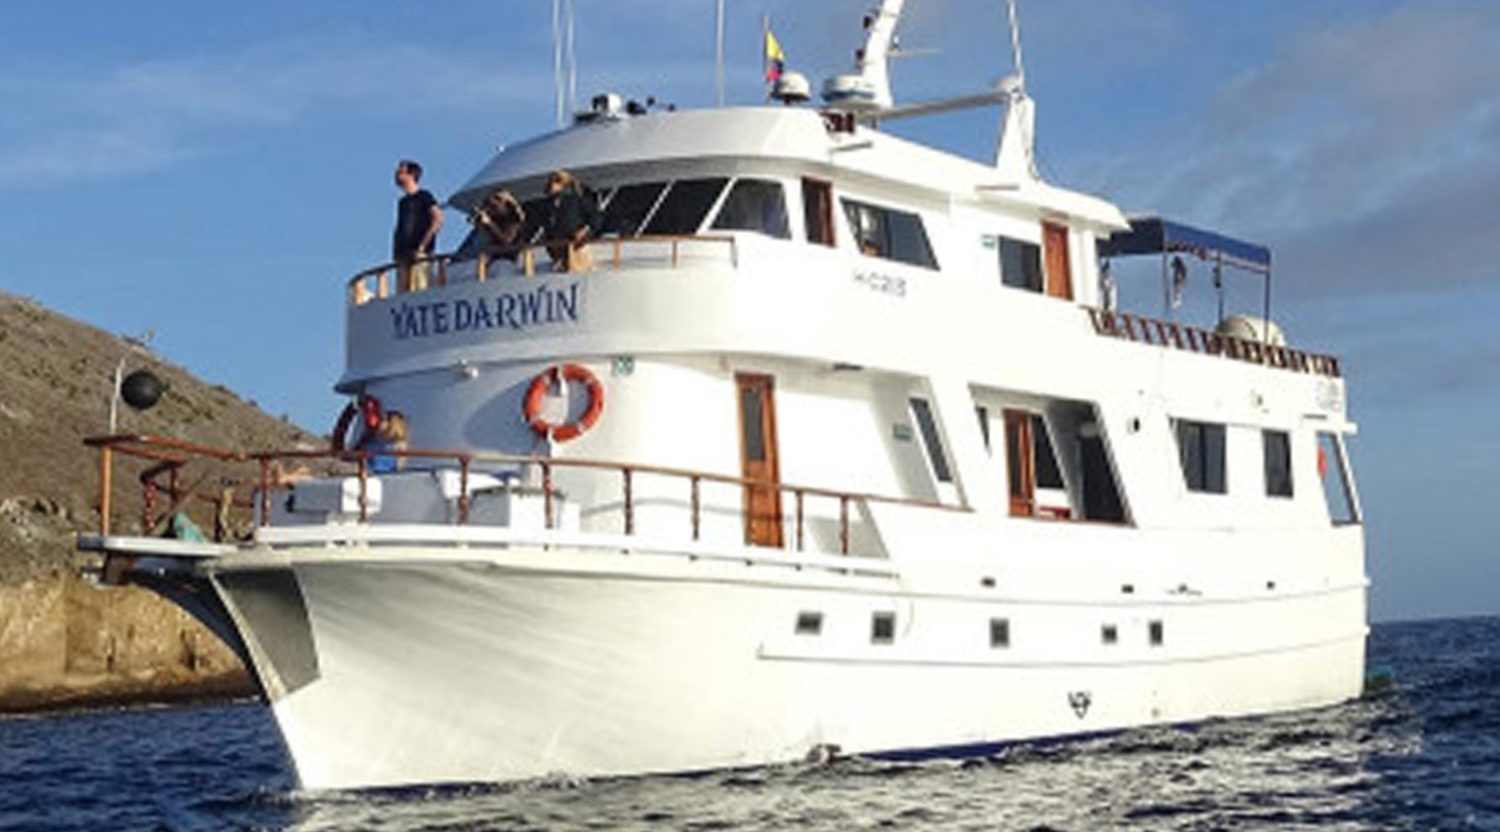 darwin yacht of galapagos islands